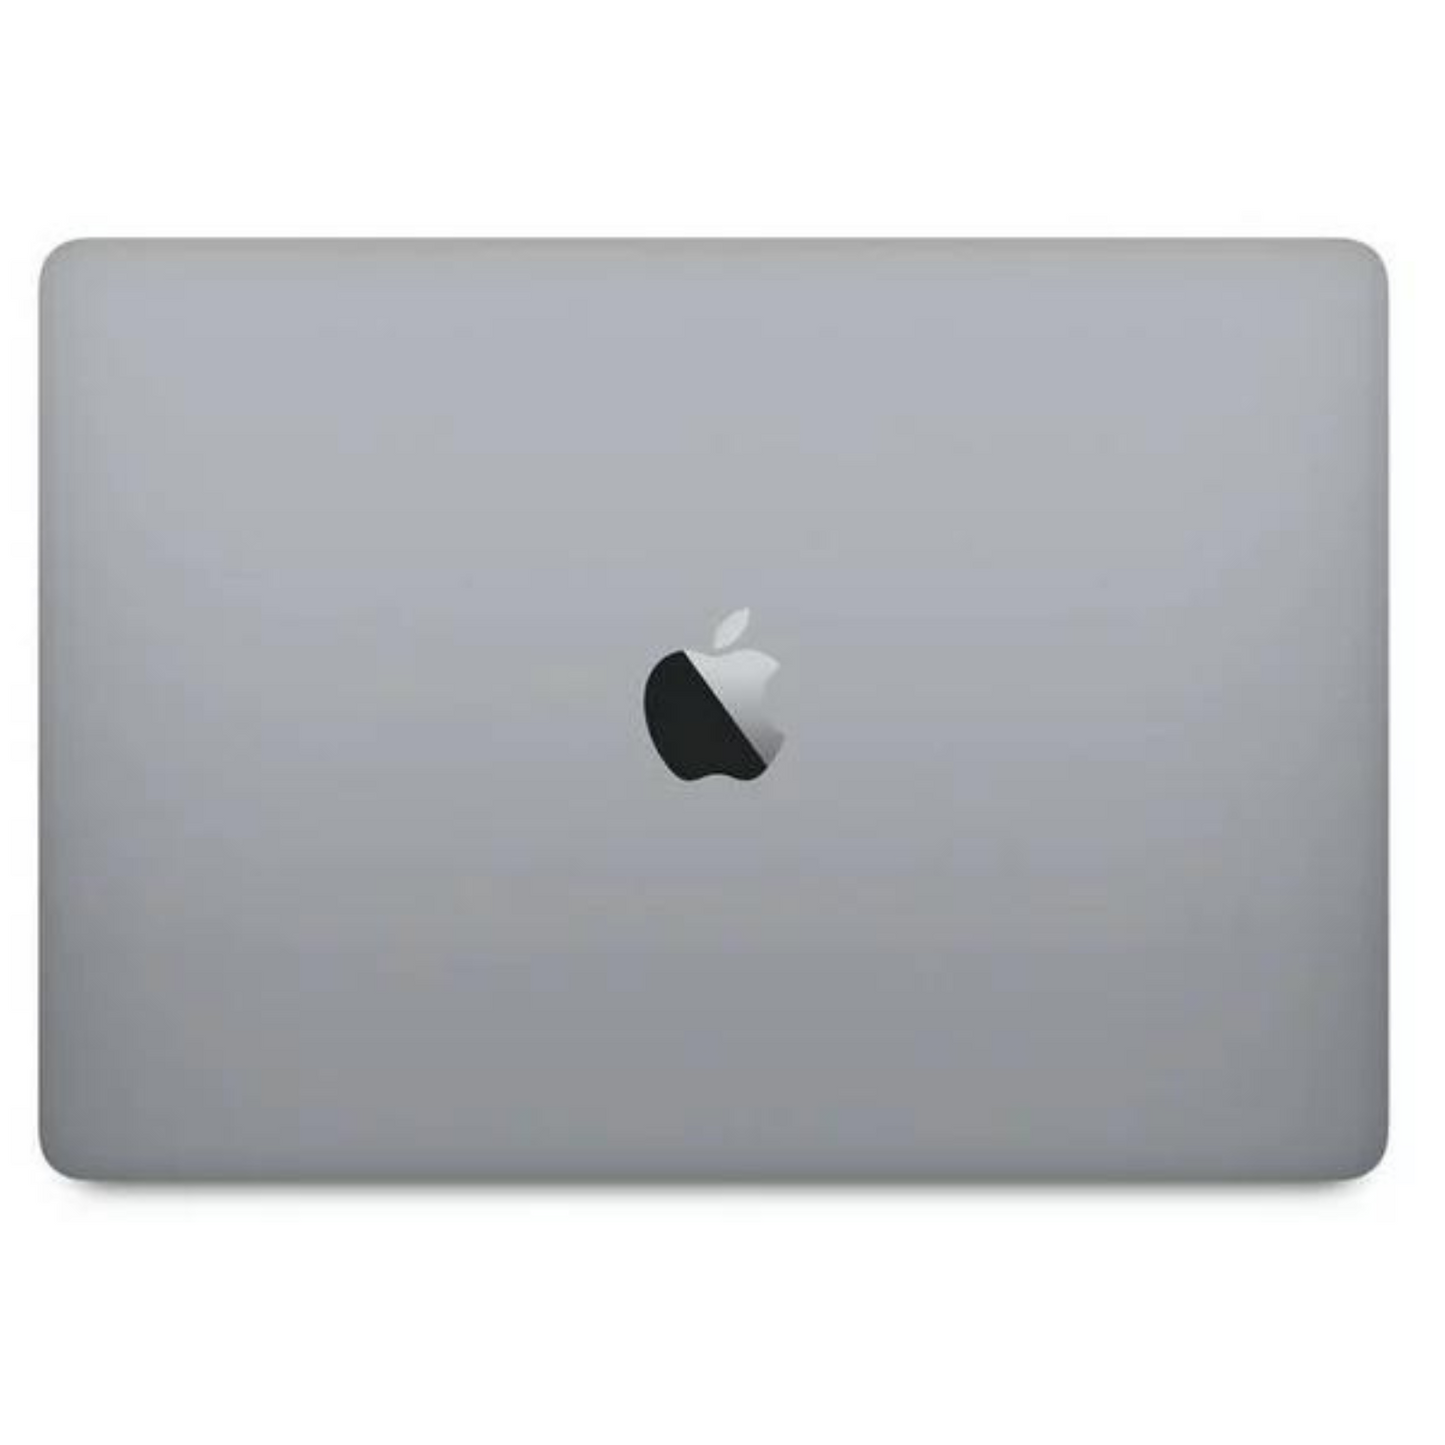 2021 Apple MacBook Pro (16-inch, Apple M1 Pro chip with 10 ‘core CPU and 16â ‘core GPU, 16GB RAM, 512TB SSD) - Space Grey